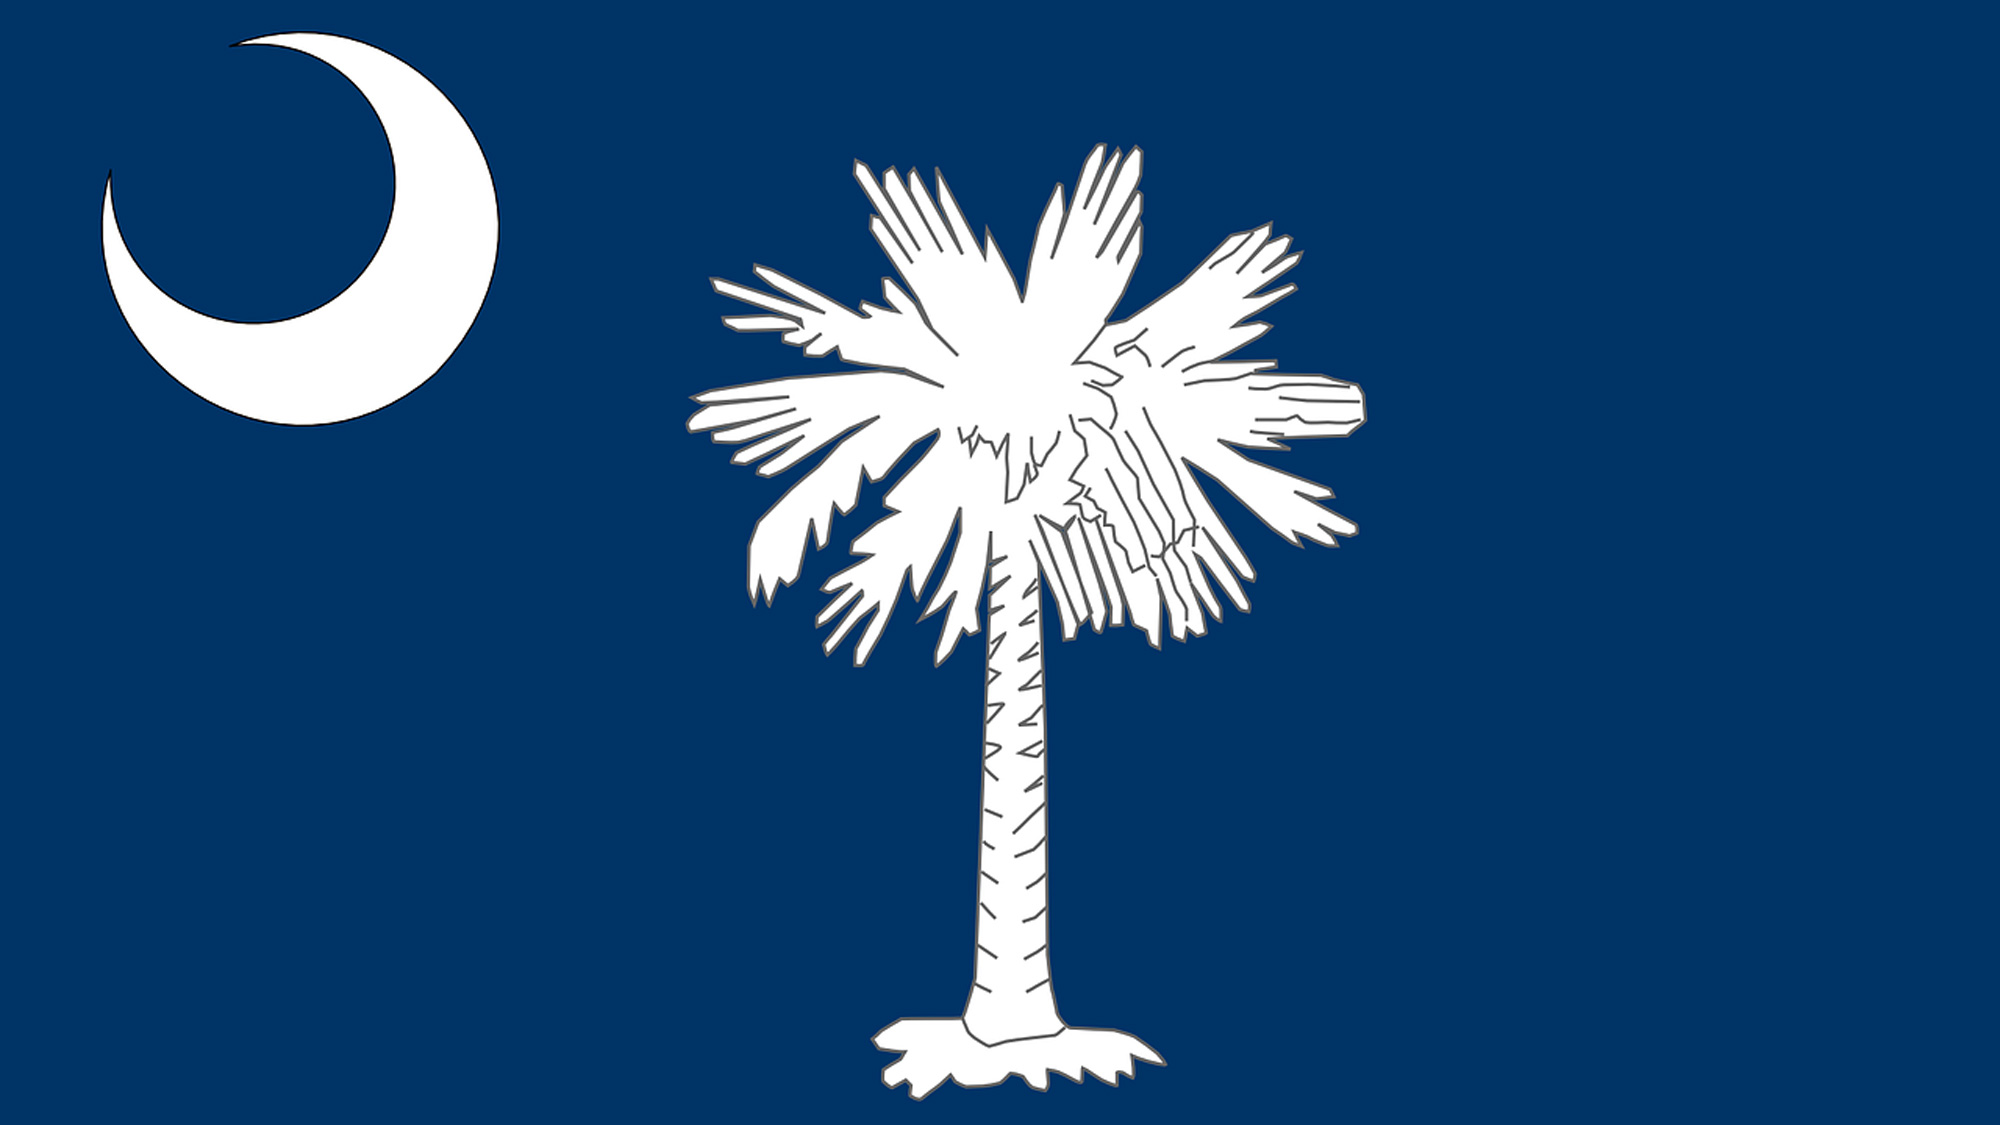 South Carolina flag - Blue flag with moon and tree